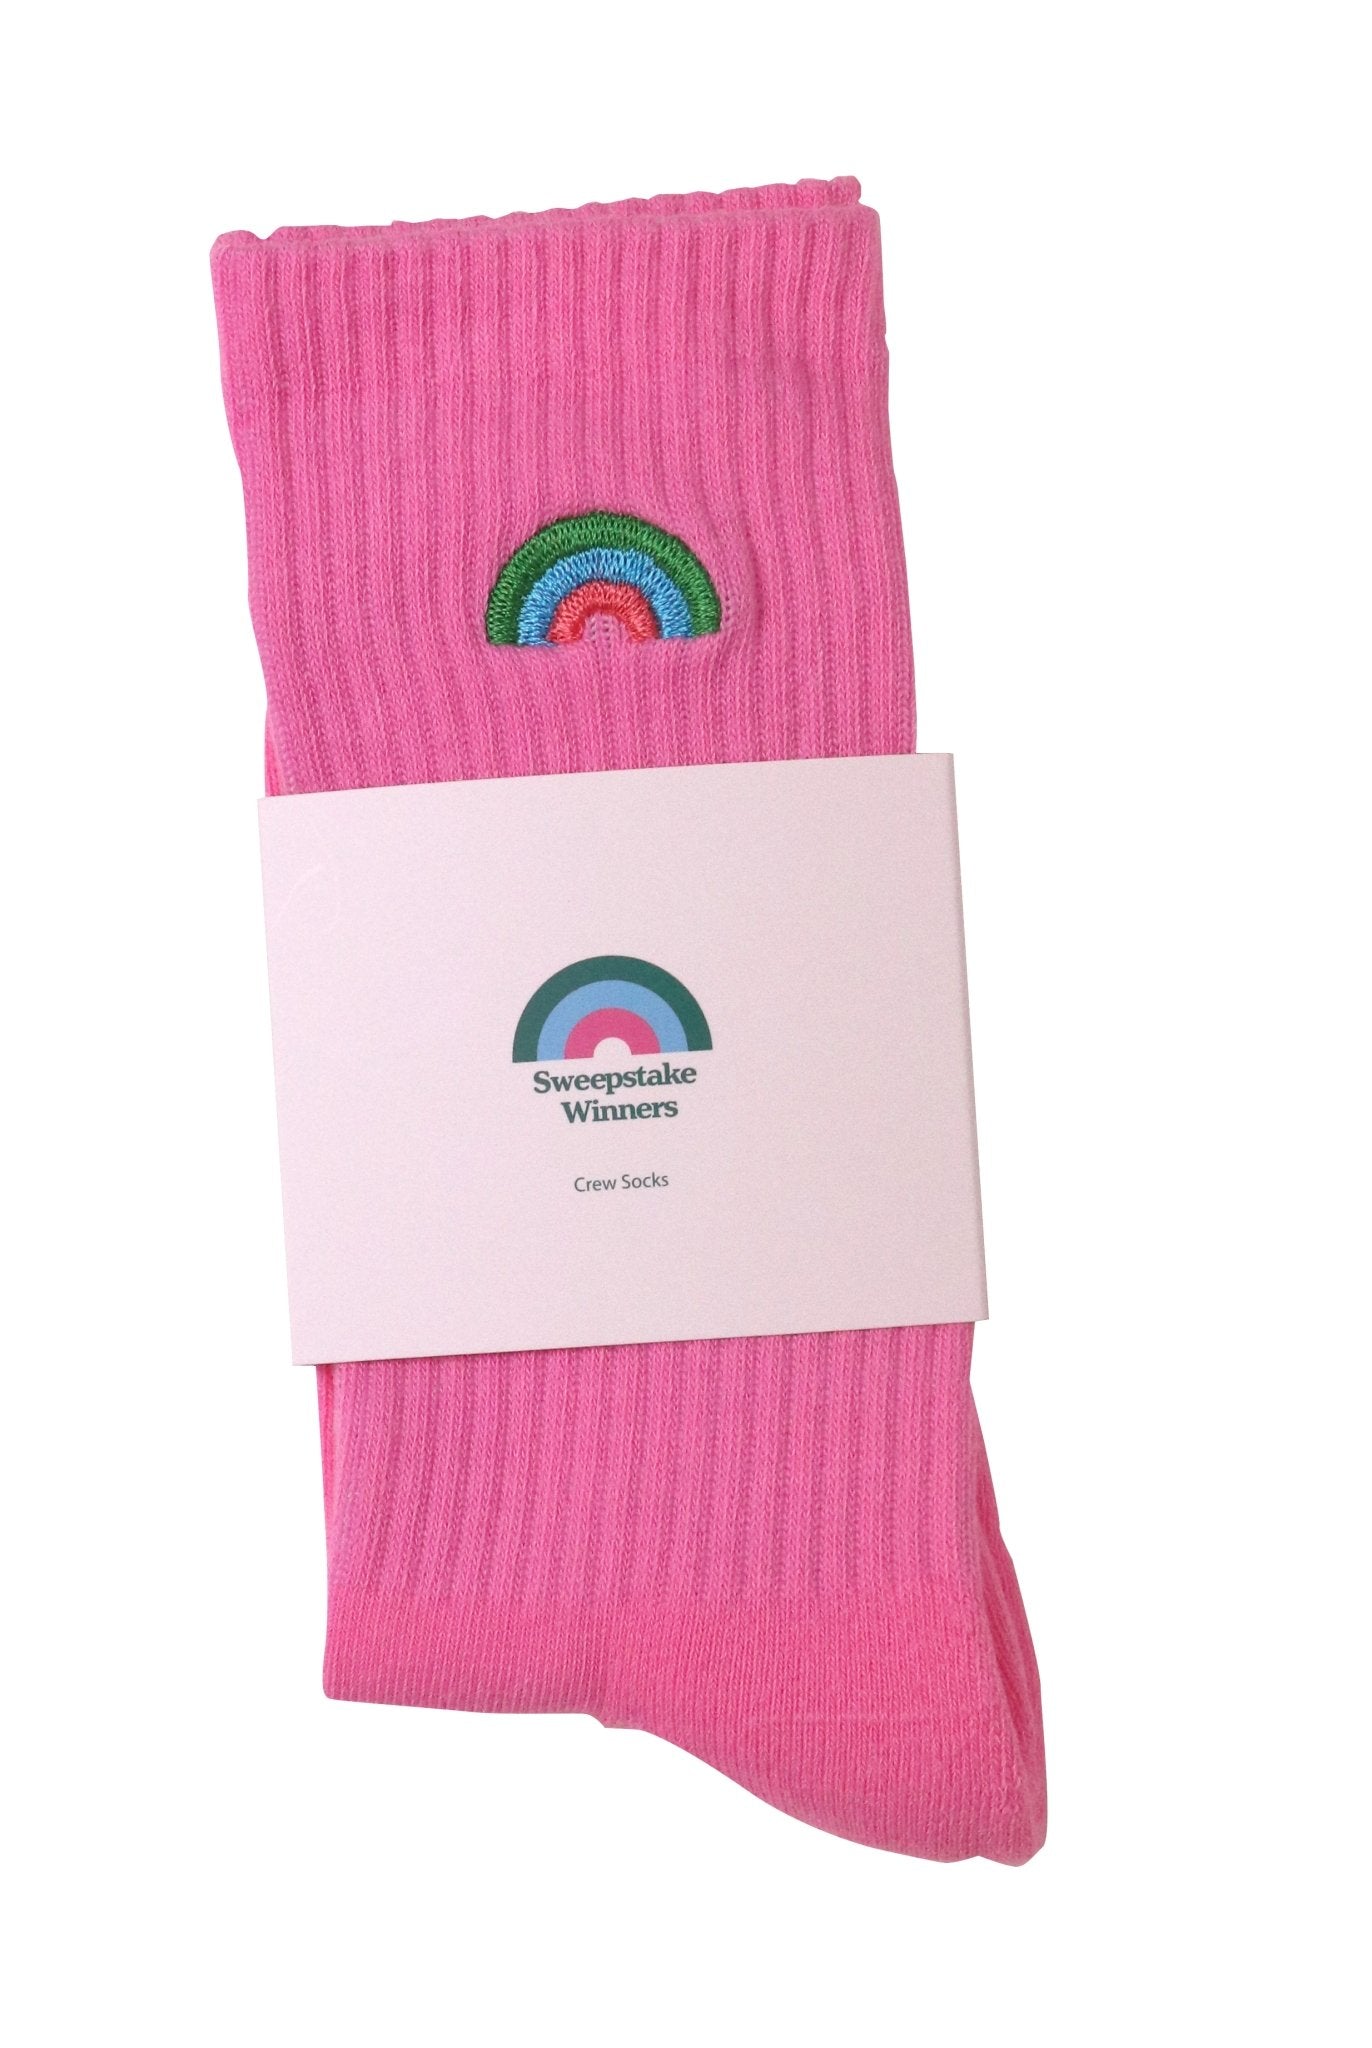 Rainbow Embroidered Crew Socks - Bubblegum - Sweepstake Winners™